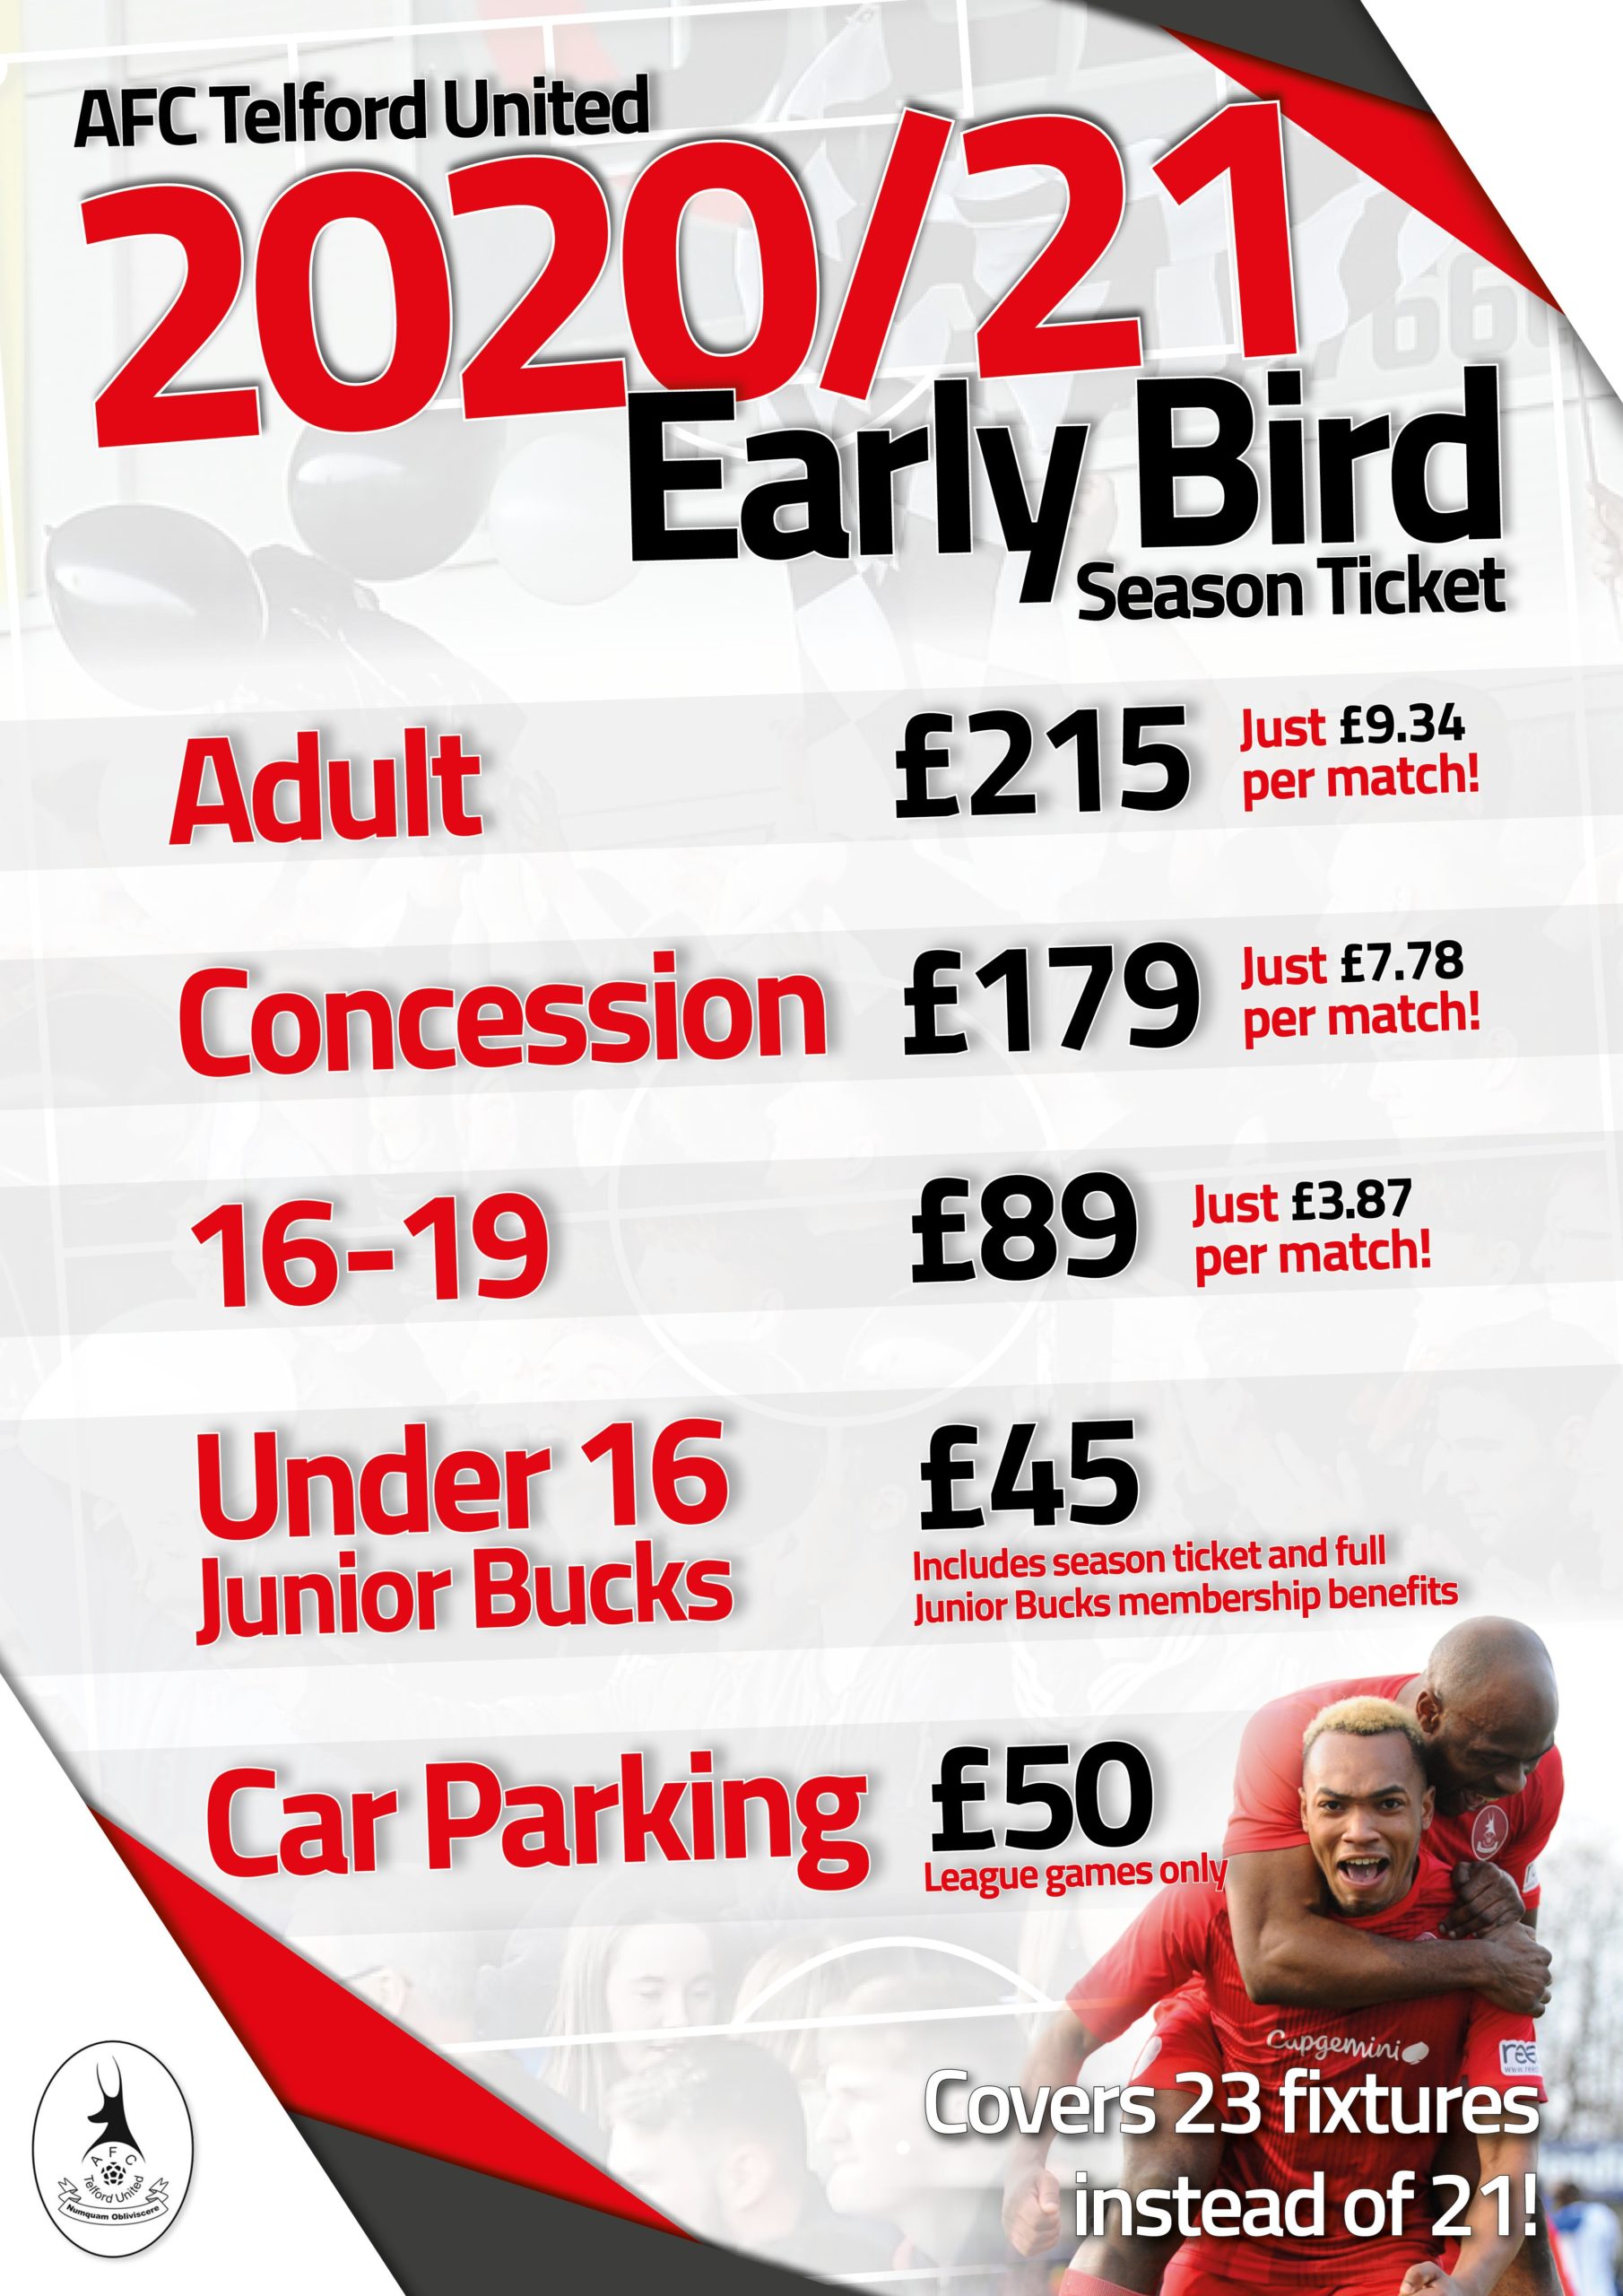 Early Bird season tickets for Season 2020/21